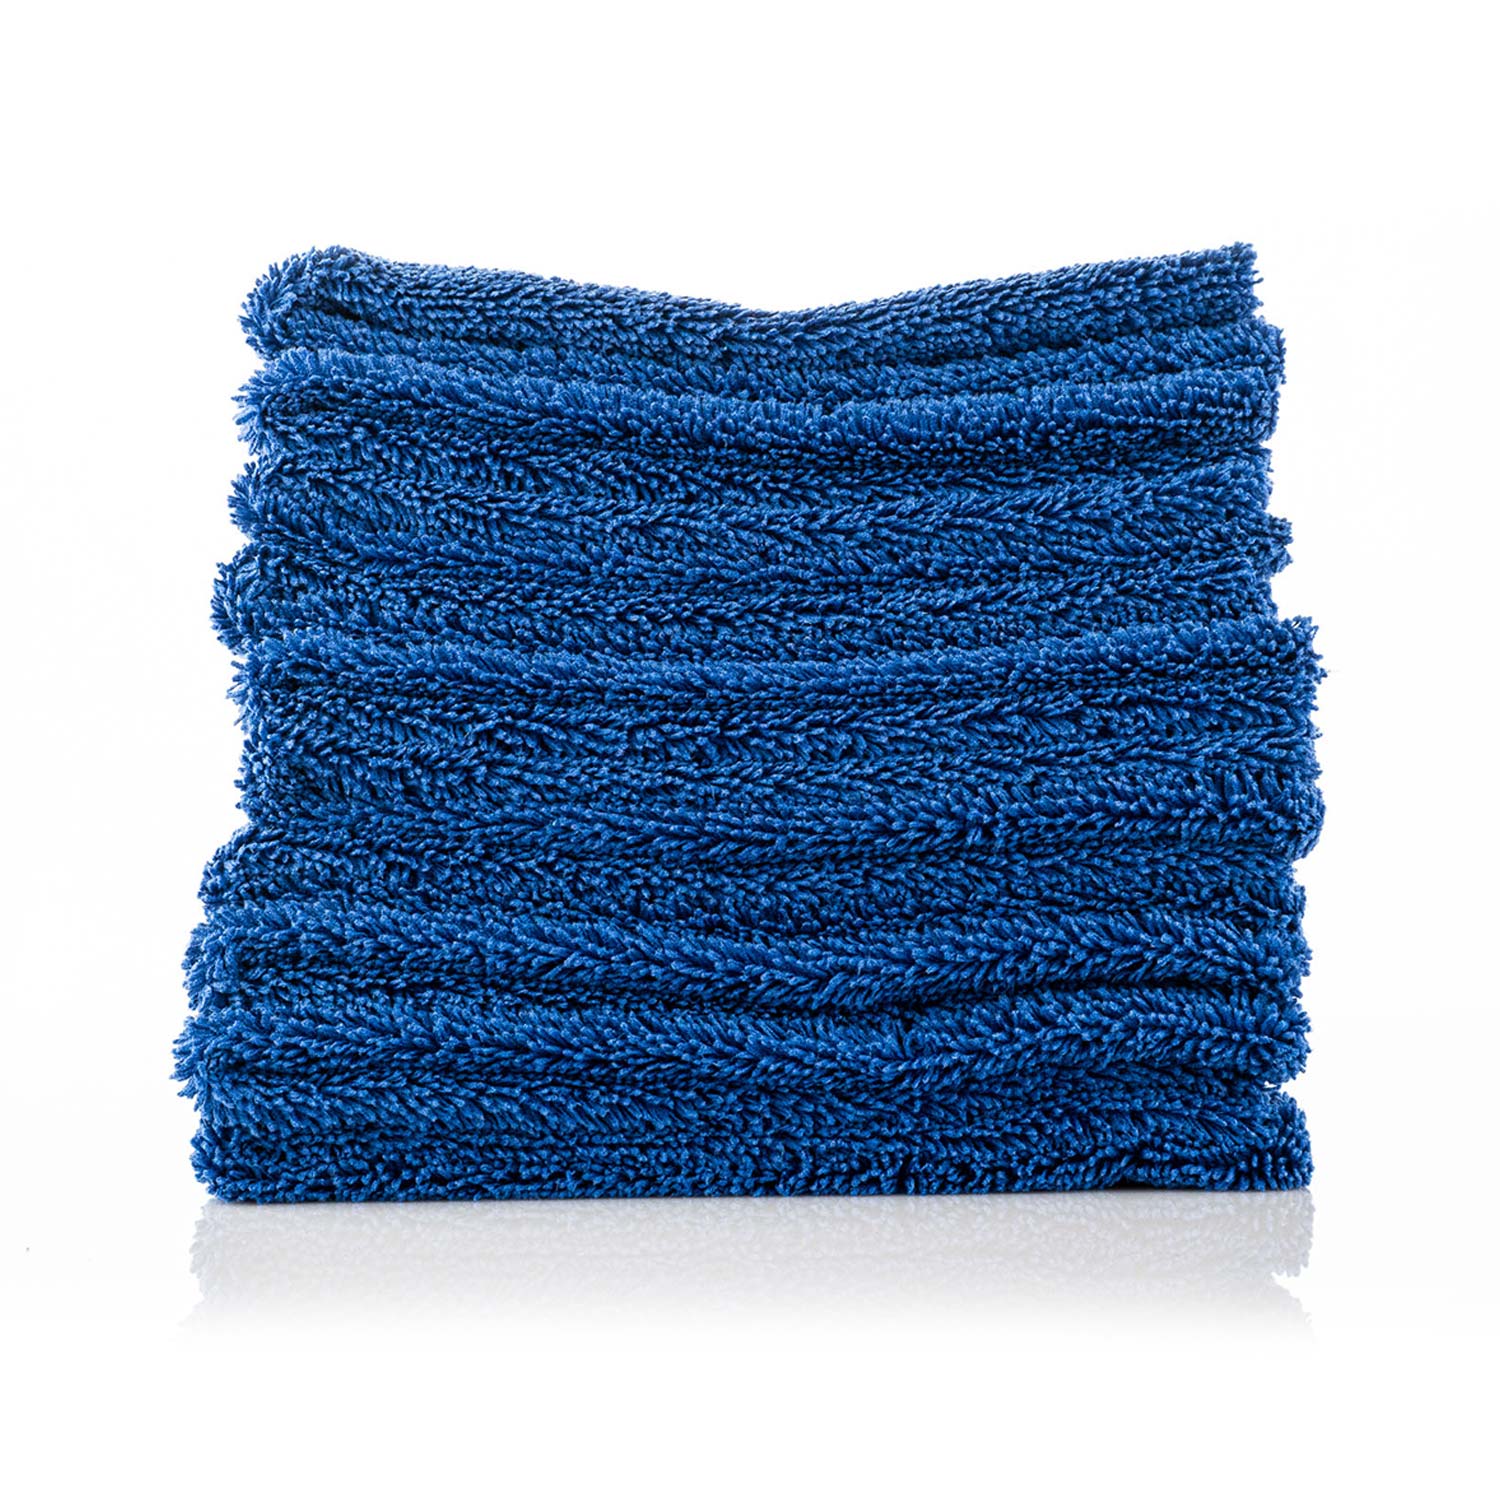 16-x-24-large-edgeless-microfiber-detailing-towel-blue-10-pack